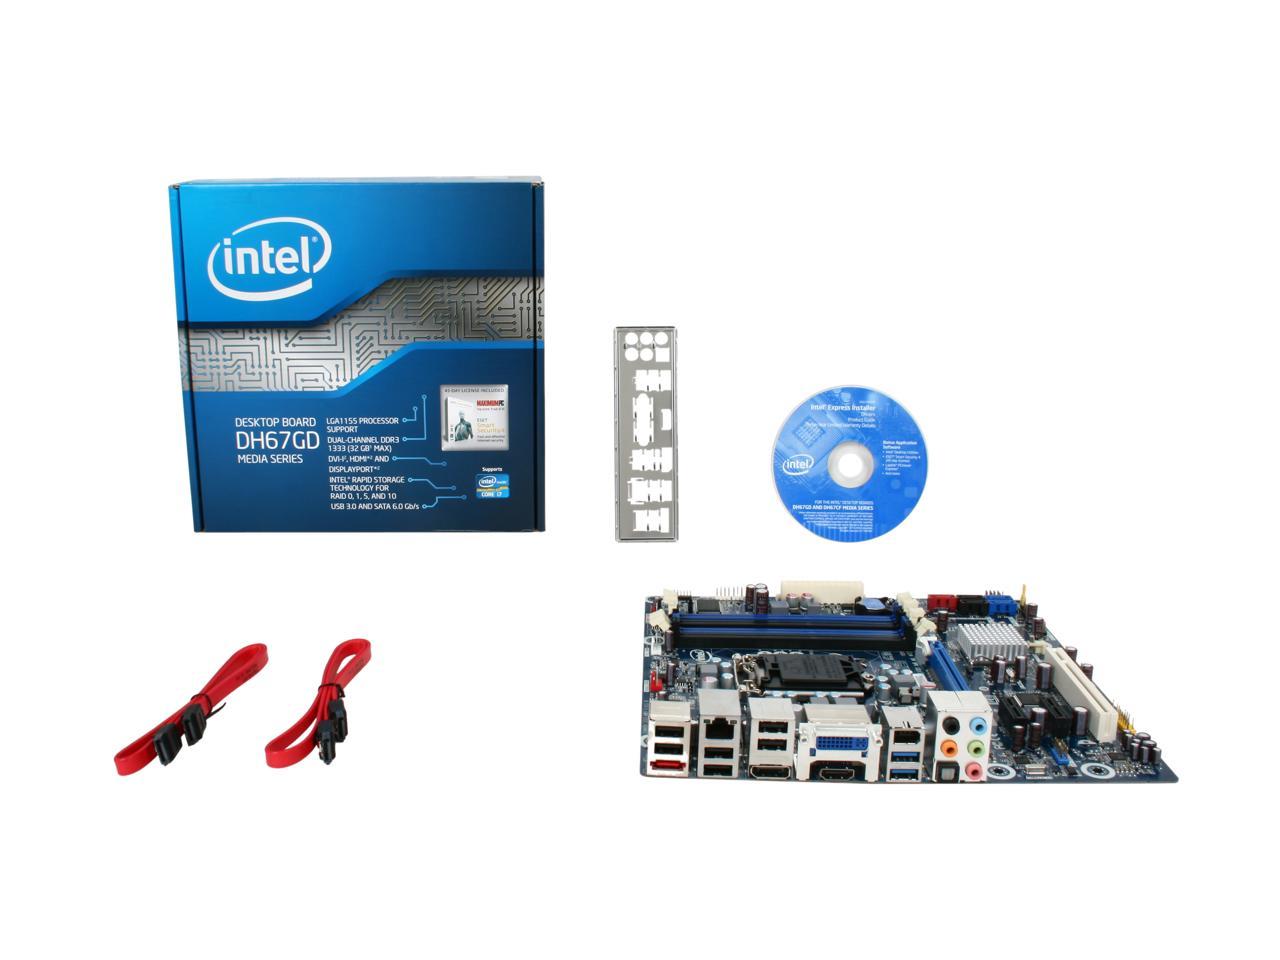 Næsten død obligat Nervesammenbrud Intel BOXDH67GD LGA 1155 Micro ATX Intel Motherboard - Newegg.com